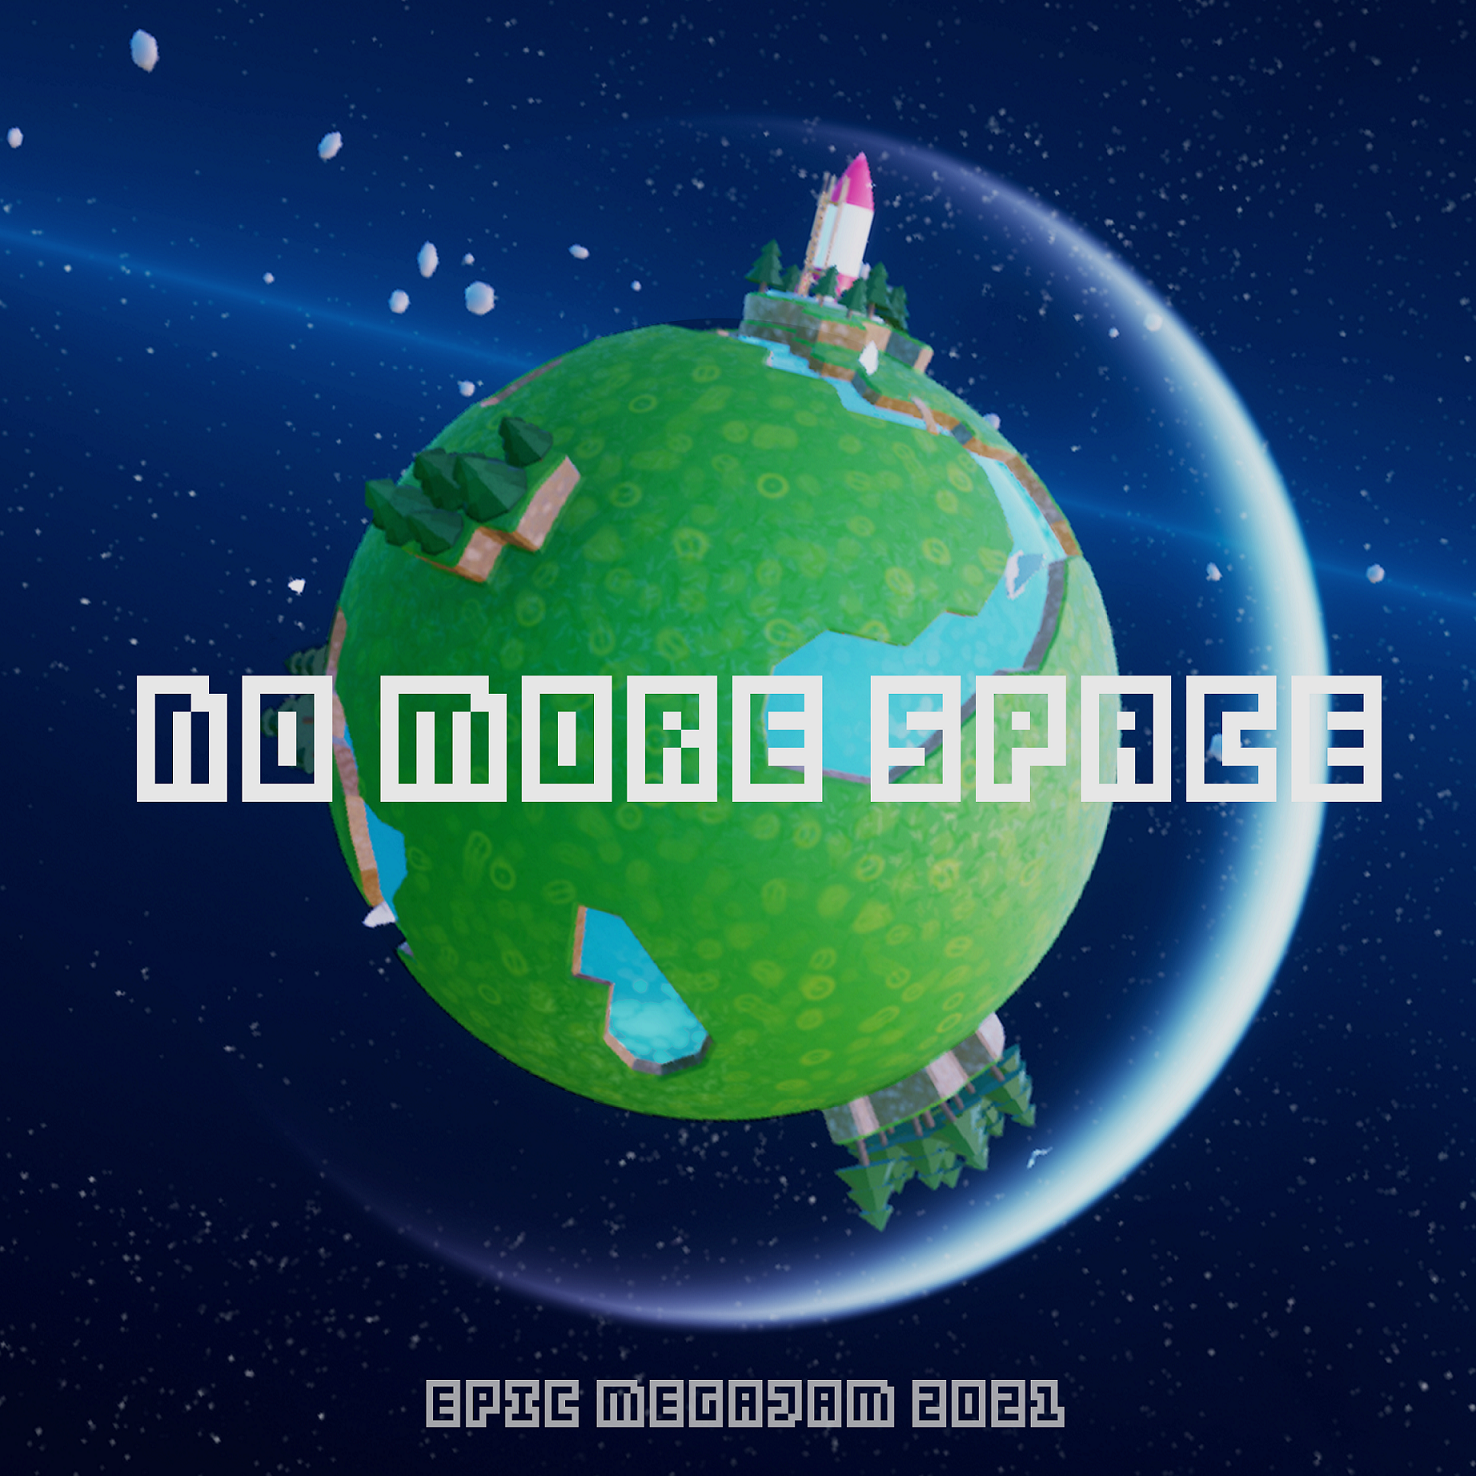 No More Space